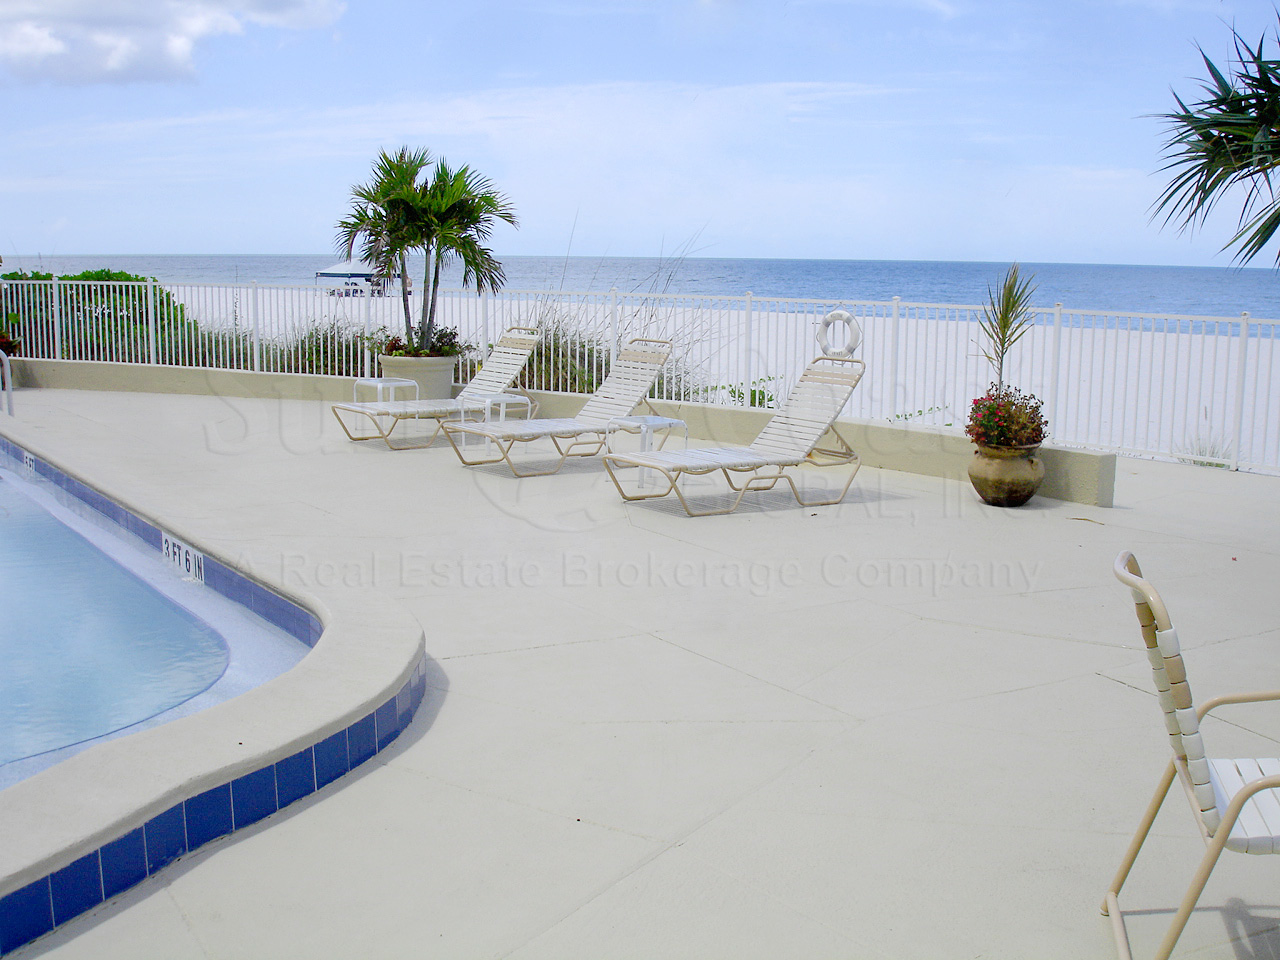 Gulf View Beach Club Community Pool and Sun Deck Furnishings